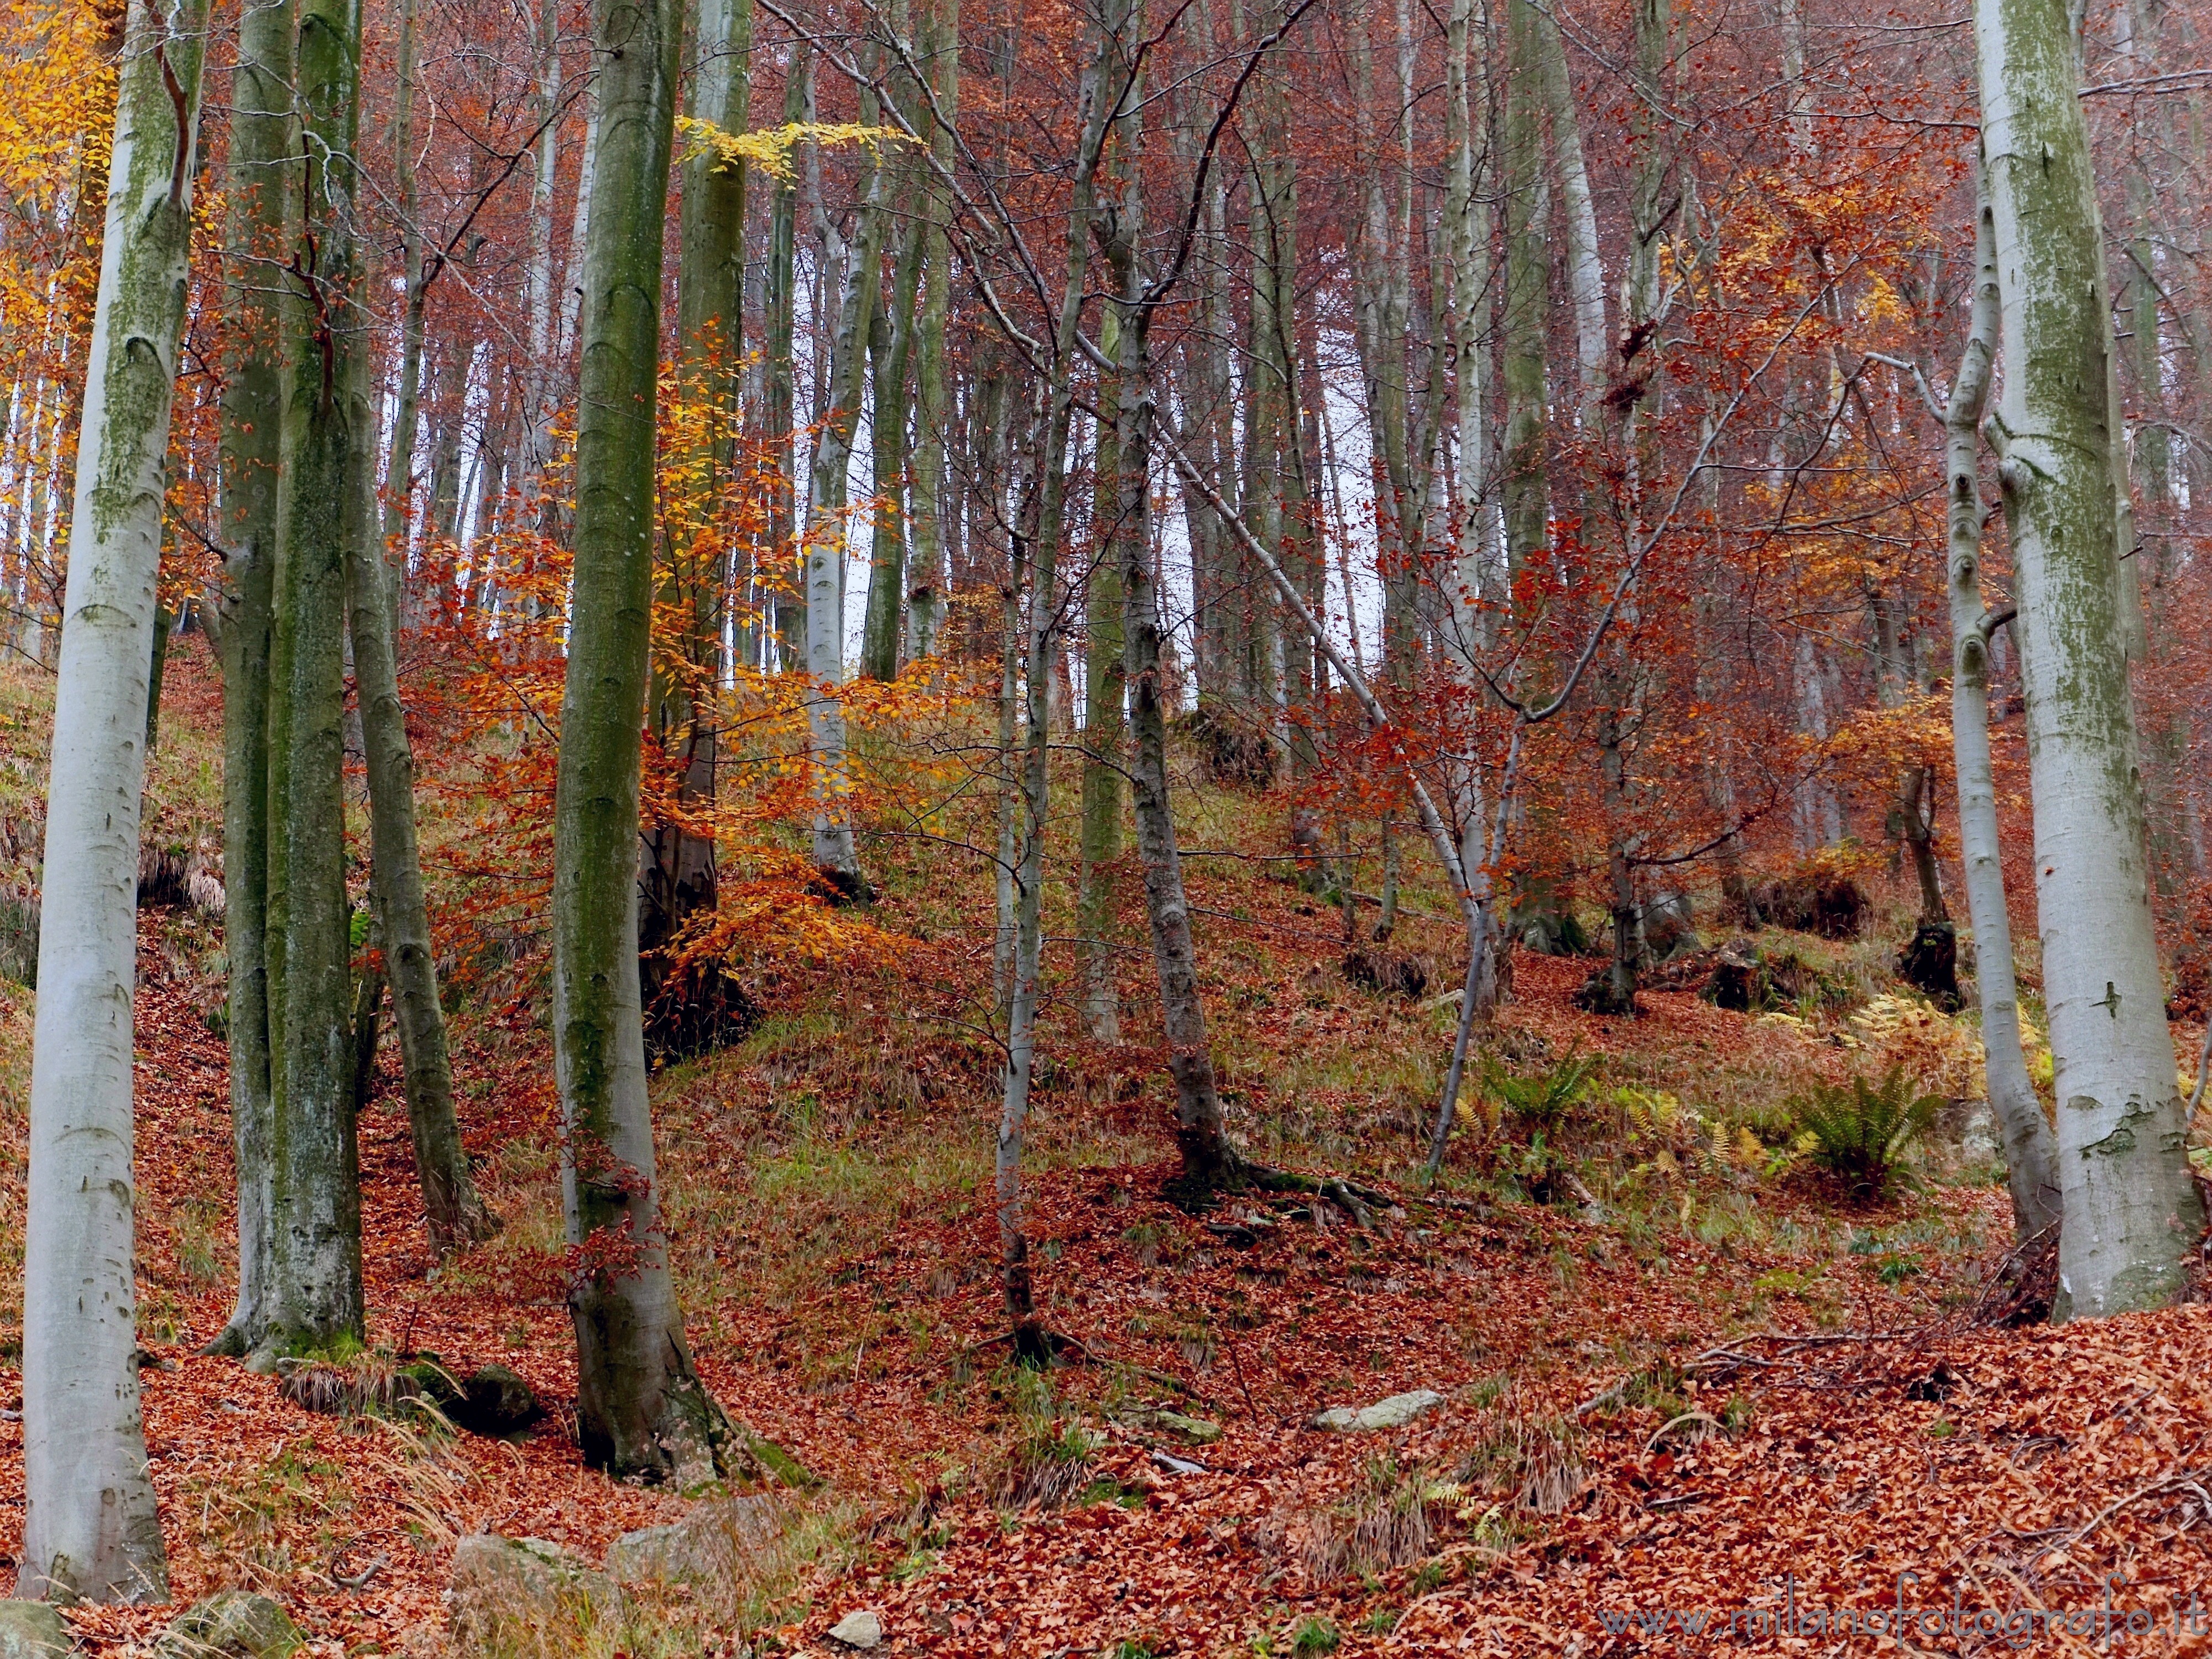 Campiglia / San Paolo Cervo (Biella, Italy): Colors of the beech forest in autumn - Campiglia / San Paolo Cervo (Biella, Italy)